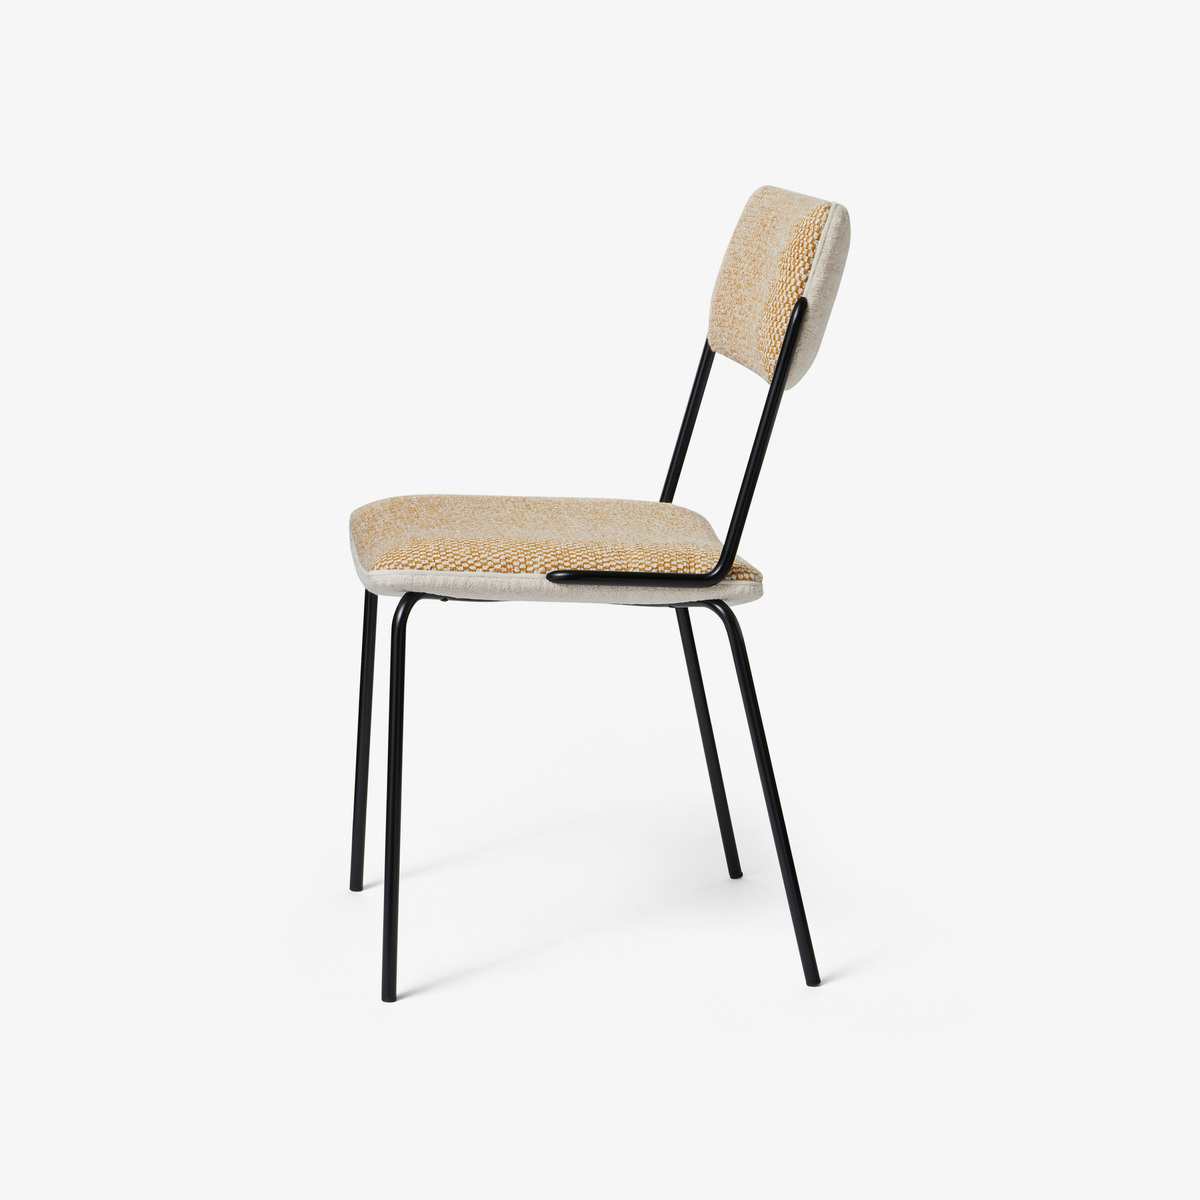 Chair Double Jeu - Publisher Fabric, Ocre - H85 x W51 x D43 cm - Steel /Cotton - image 1